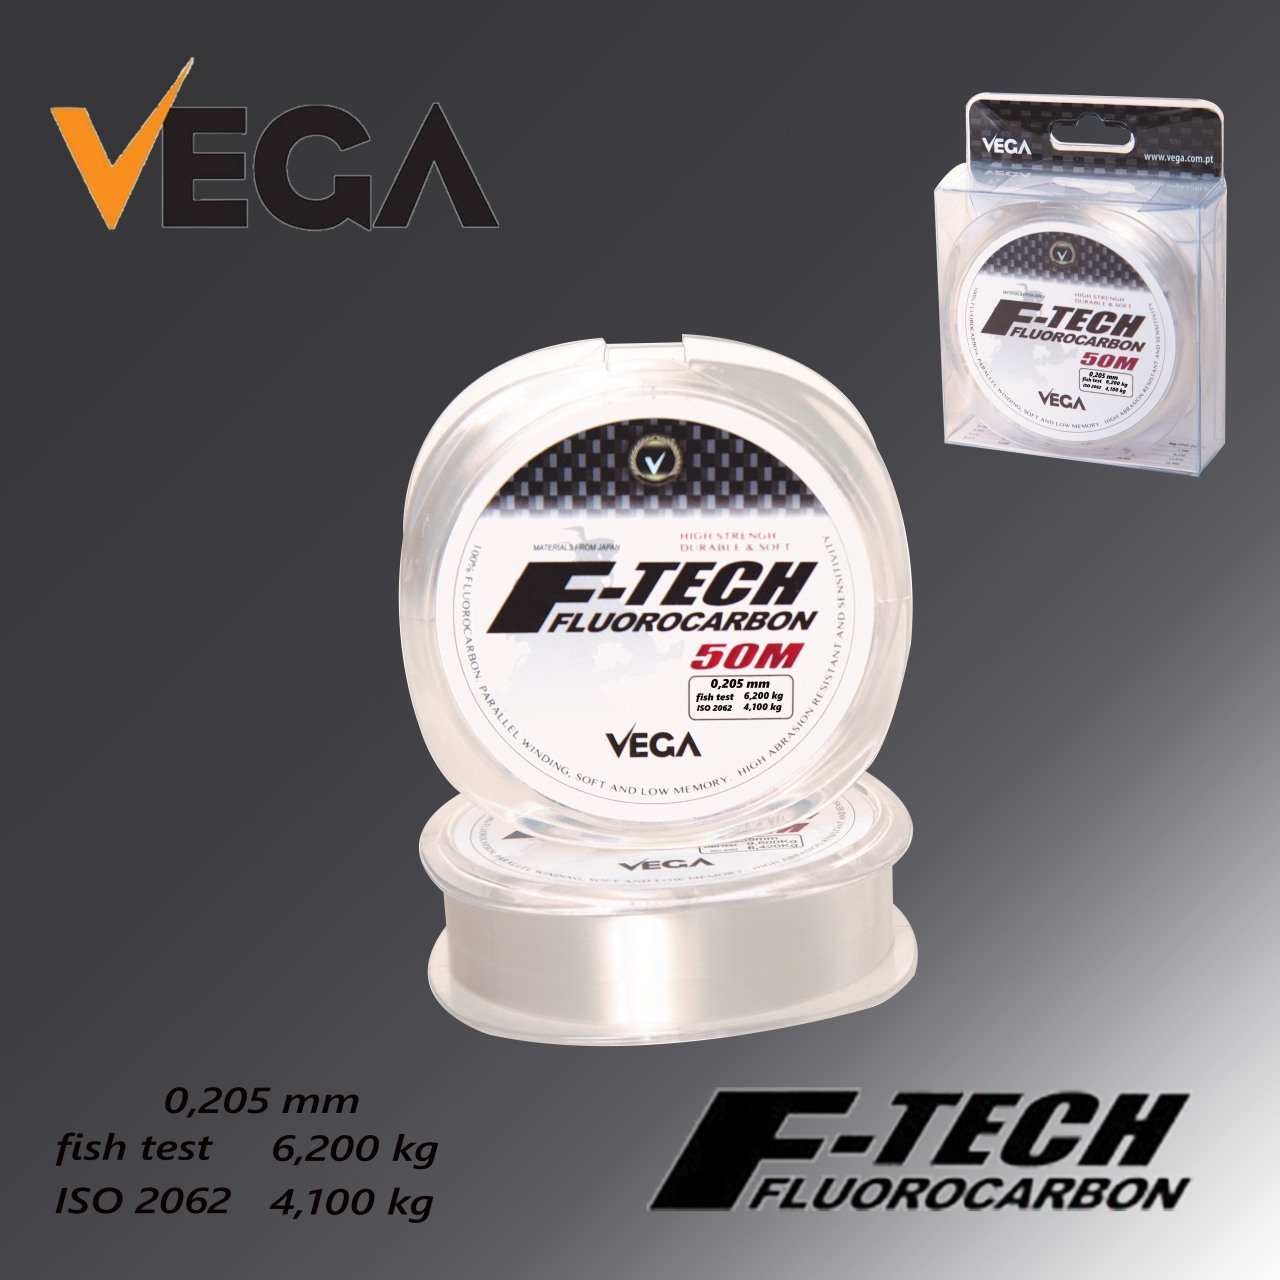 Vega F-Tech Fluorocarbon 50mt 0,205 mm Misina